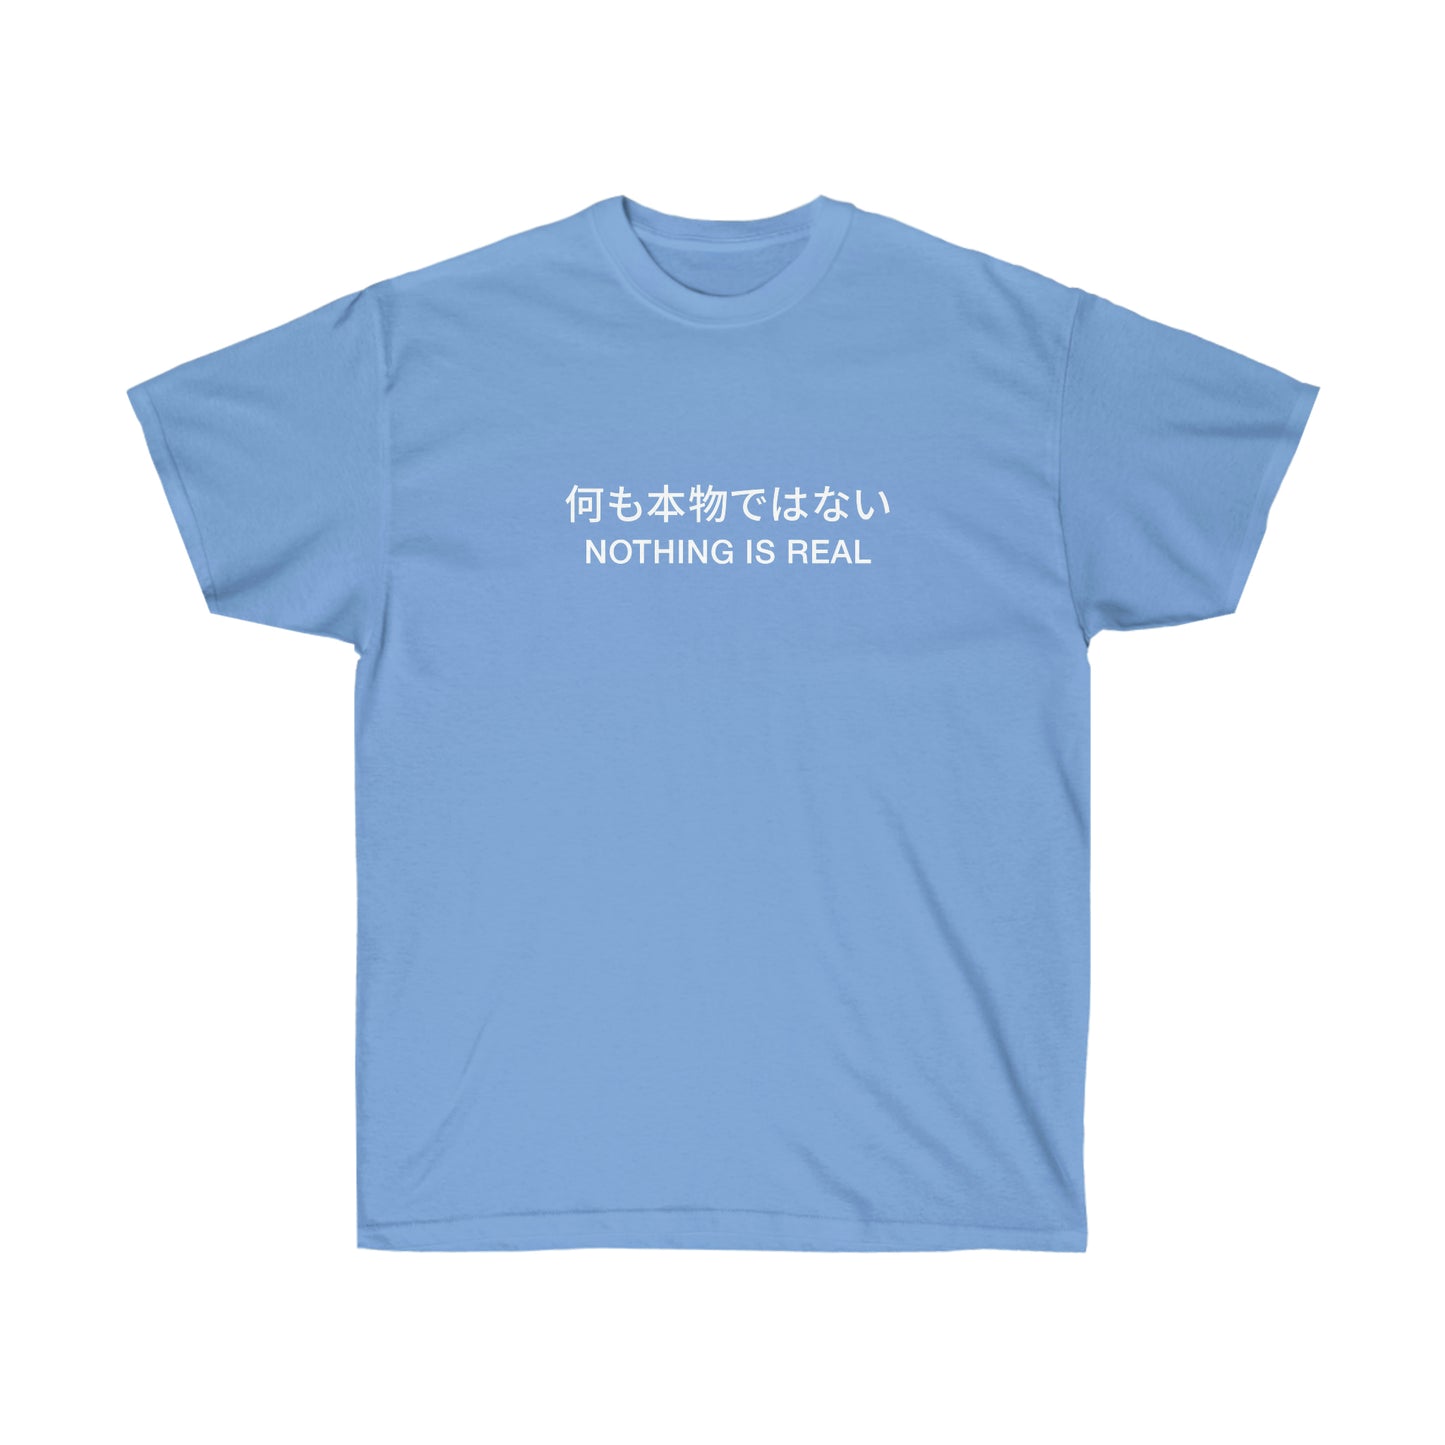 Nothing Is Real Aesthetic Japanese shirt Streetwear Tumblr Tee Grunge T-shirt